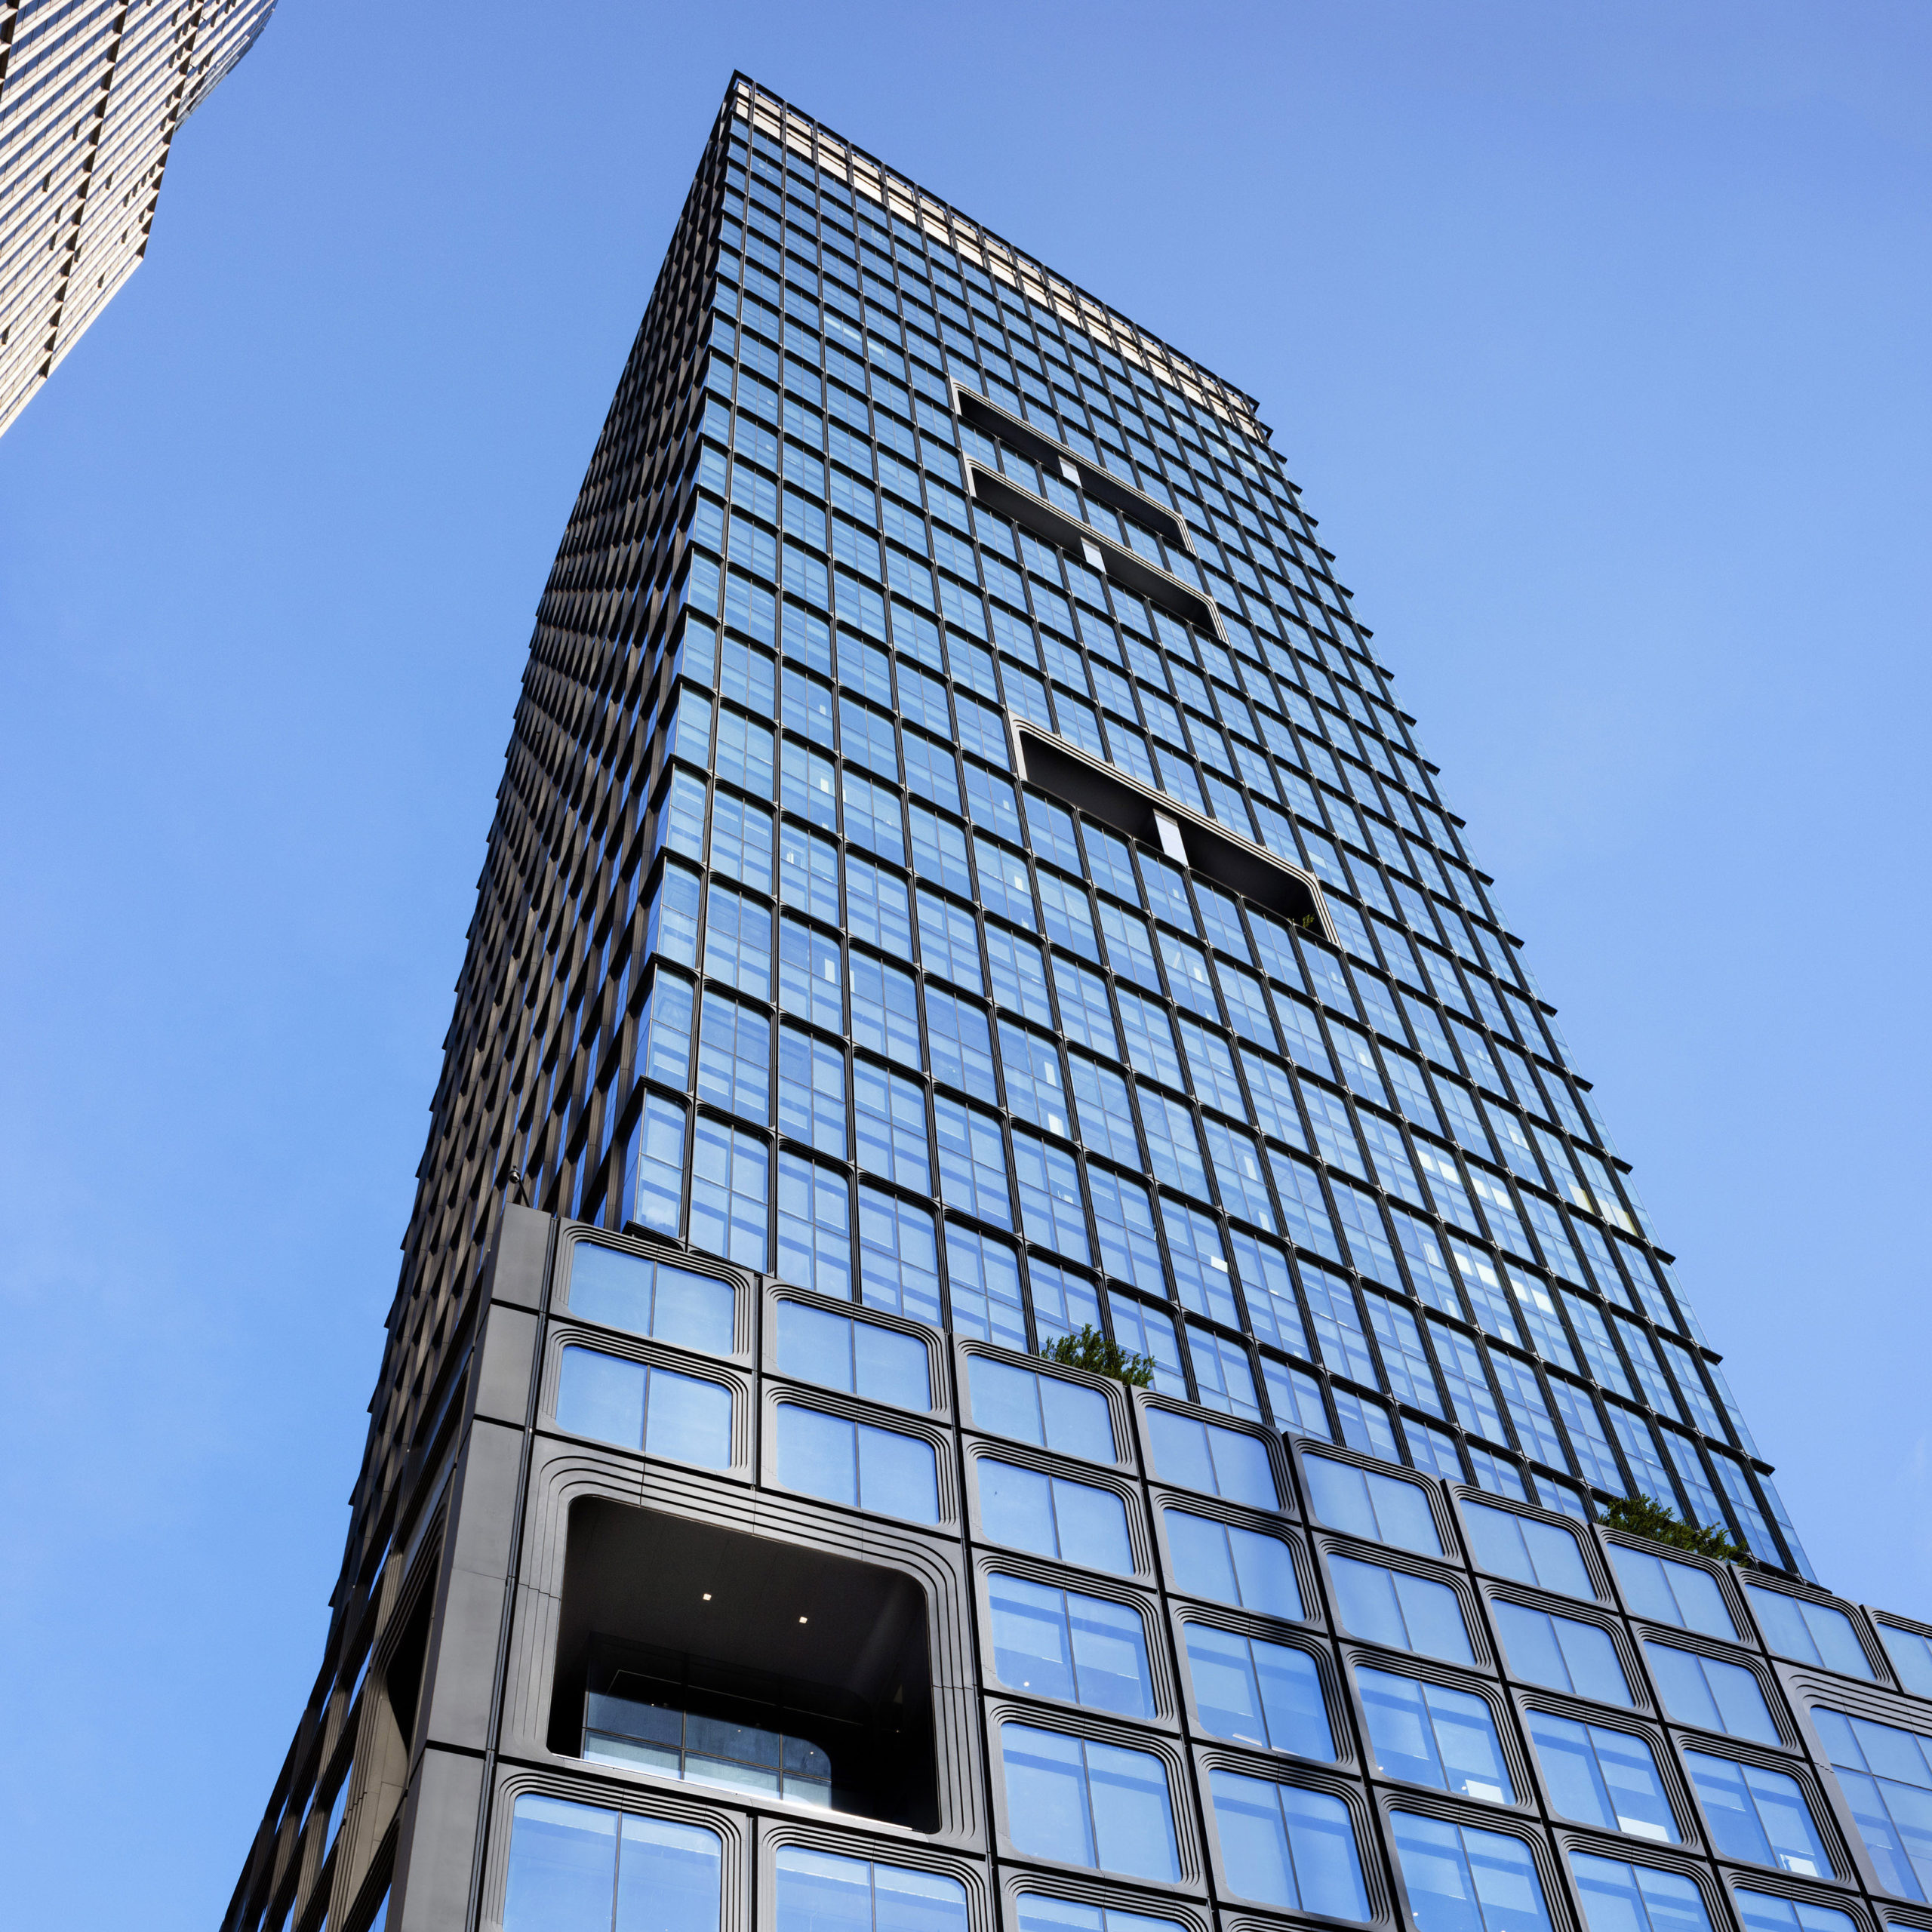 Architecture Merit Award: 55 Hudson Yards by Kohn Pedersen Fox Associates, in New York, NY. Photo: Raimund Koch.